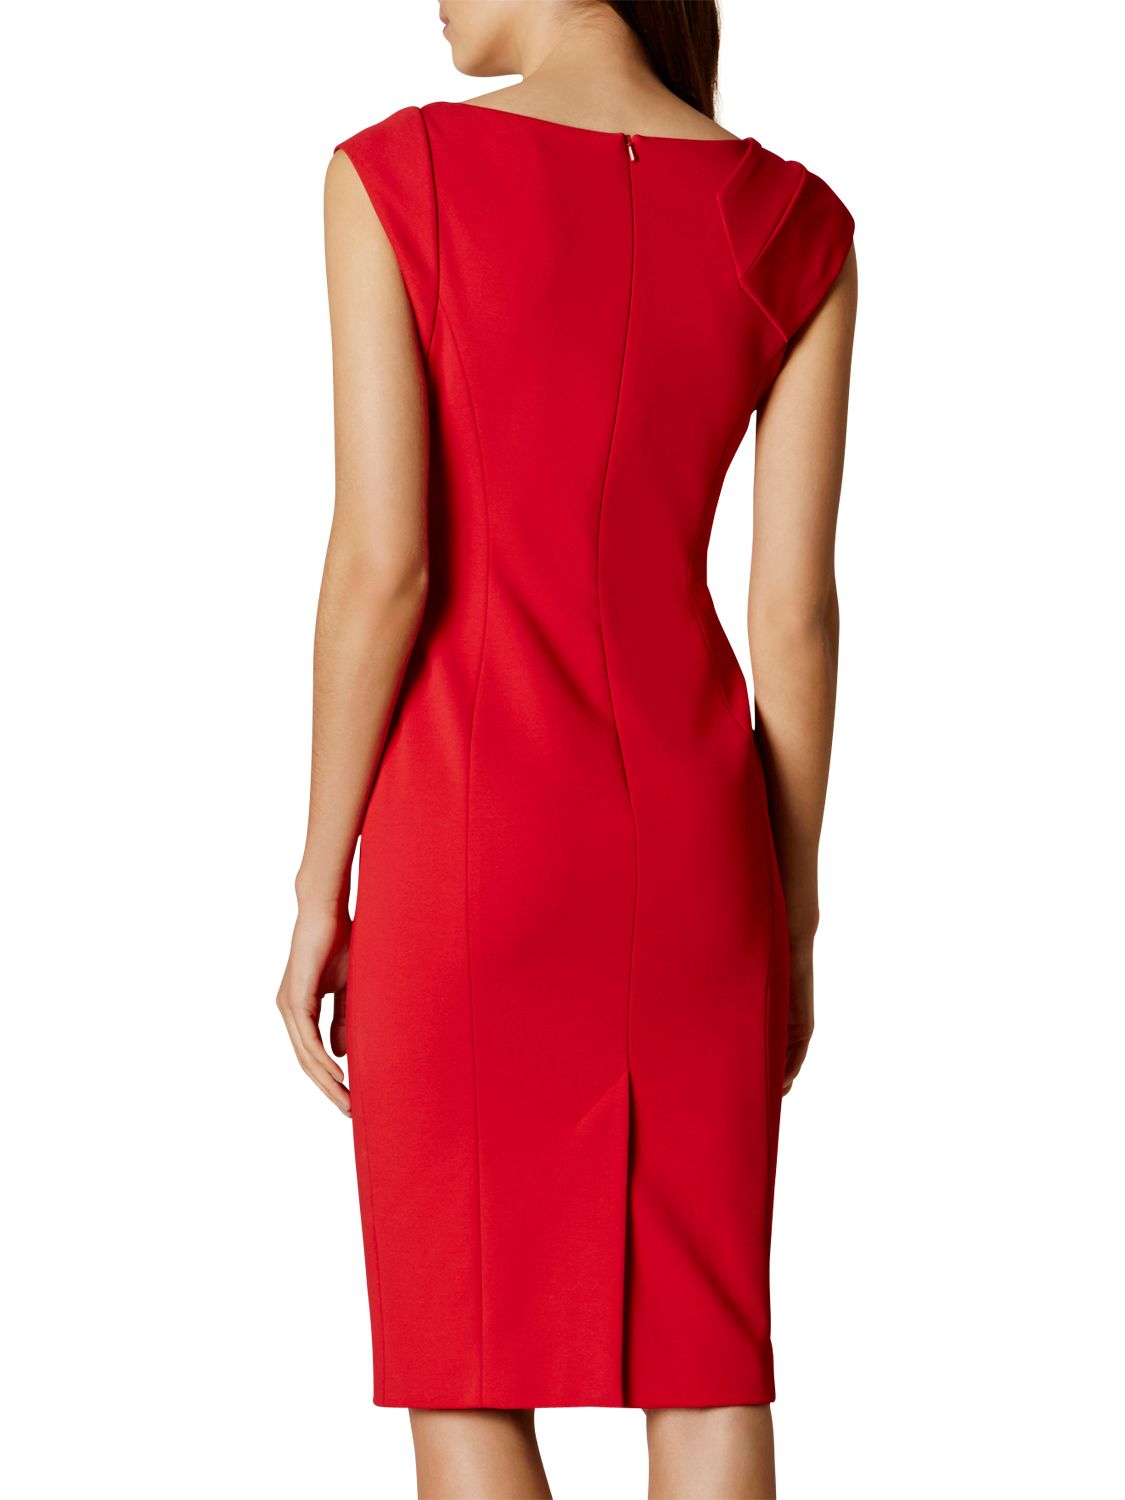 Karen Millen Fold Detail Pencil Dress, Red at John Lewis & Partners